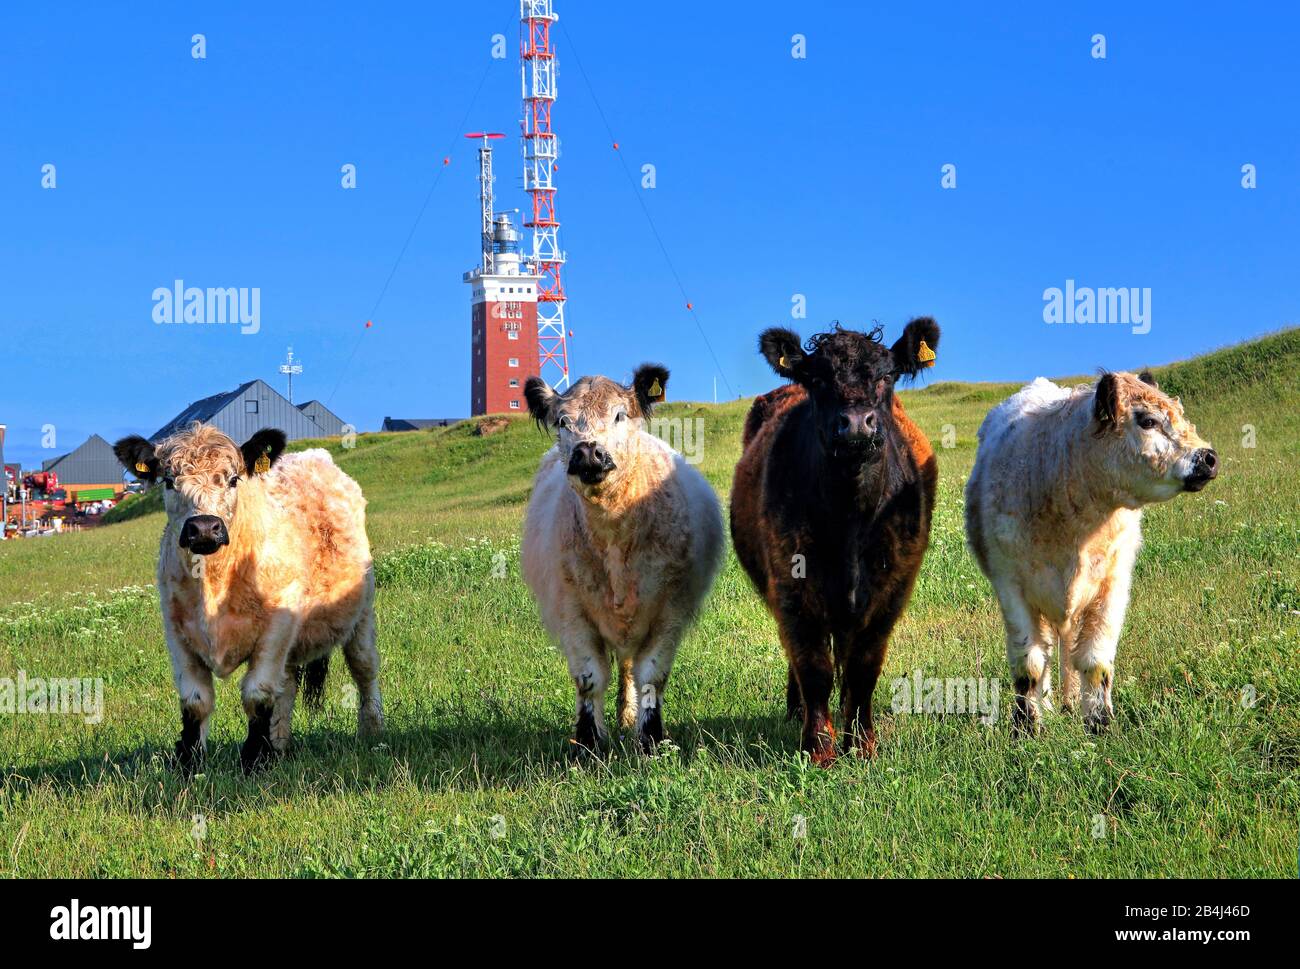 Galloway cattle on the upland with lighthouse and radio mast, Heligoland, Heligoland Bay, German Bight, North Sea Island, North Sea, Schleswig-Holstein, Germany Stock Photo